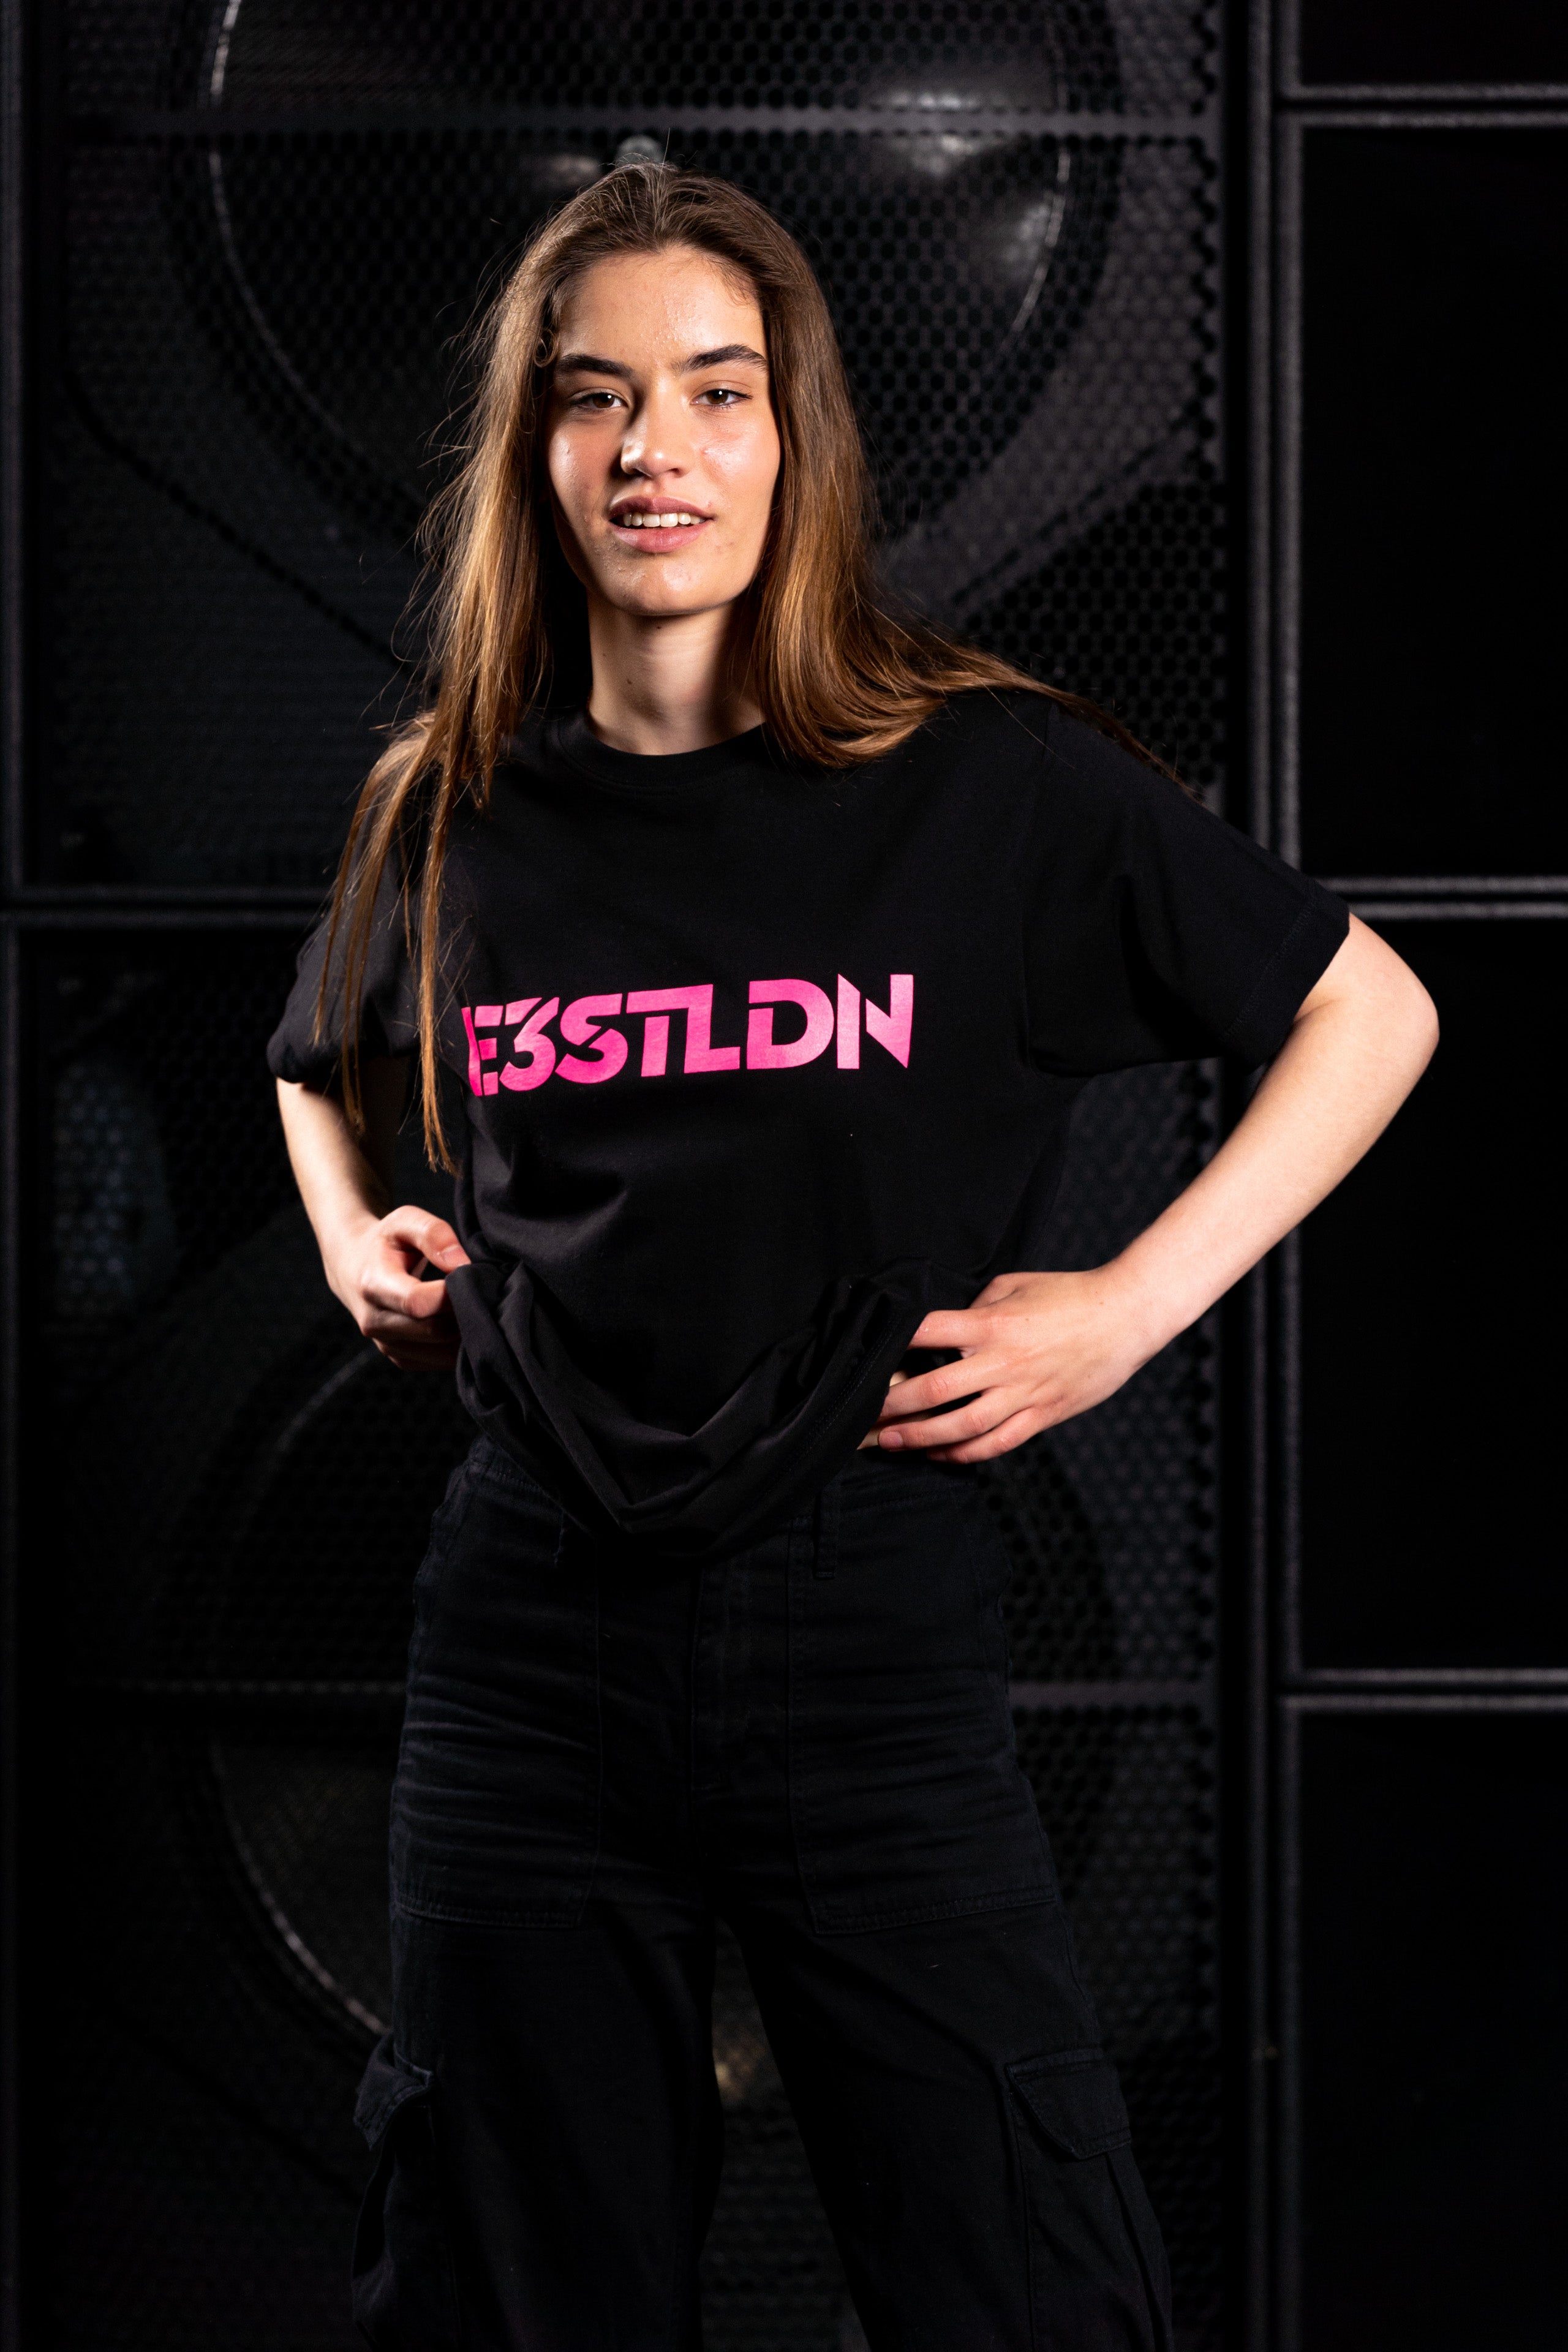 E3STLDN Neon T-shirt